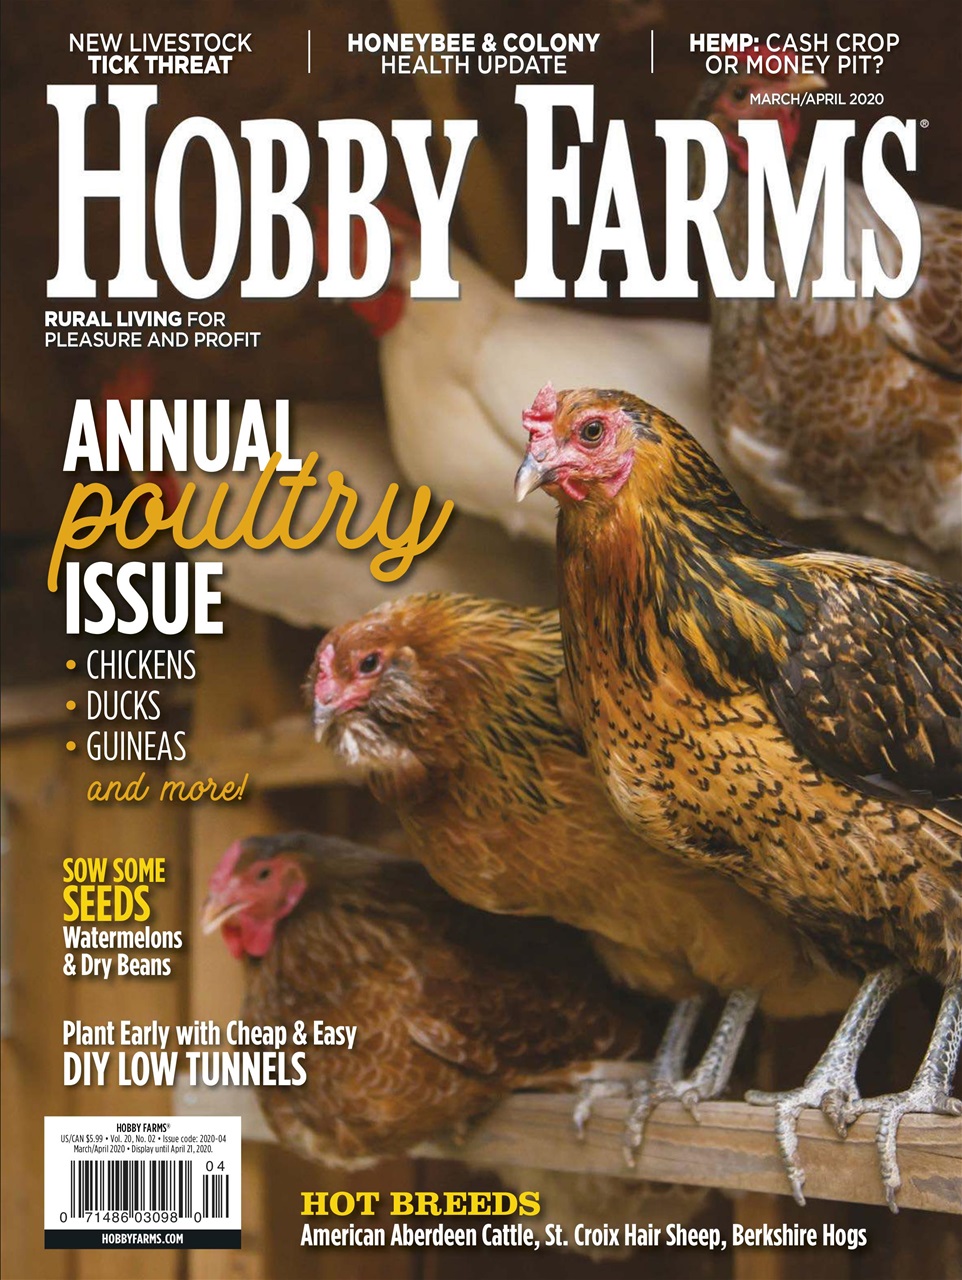 hobby farm insurance in michigan